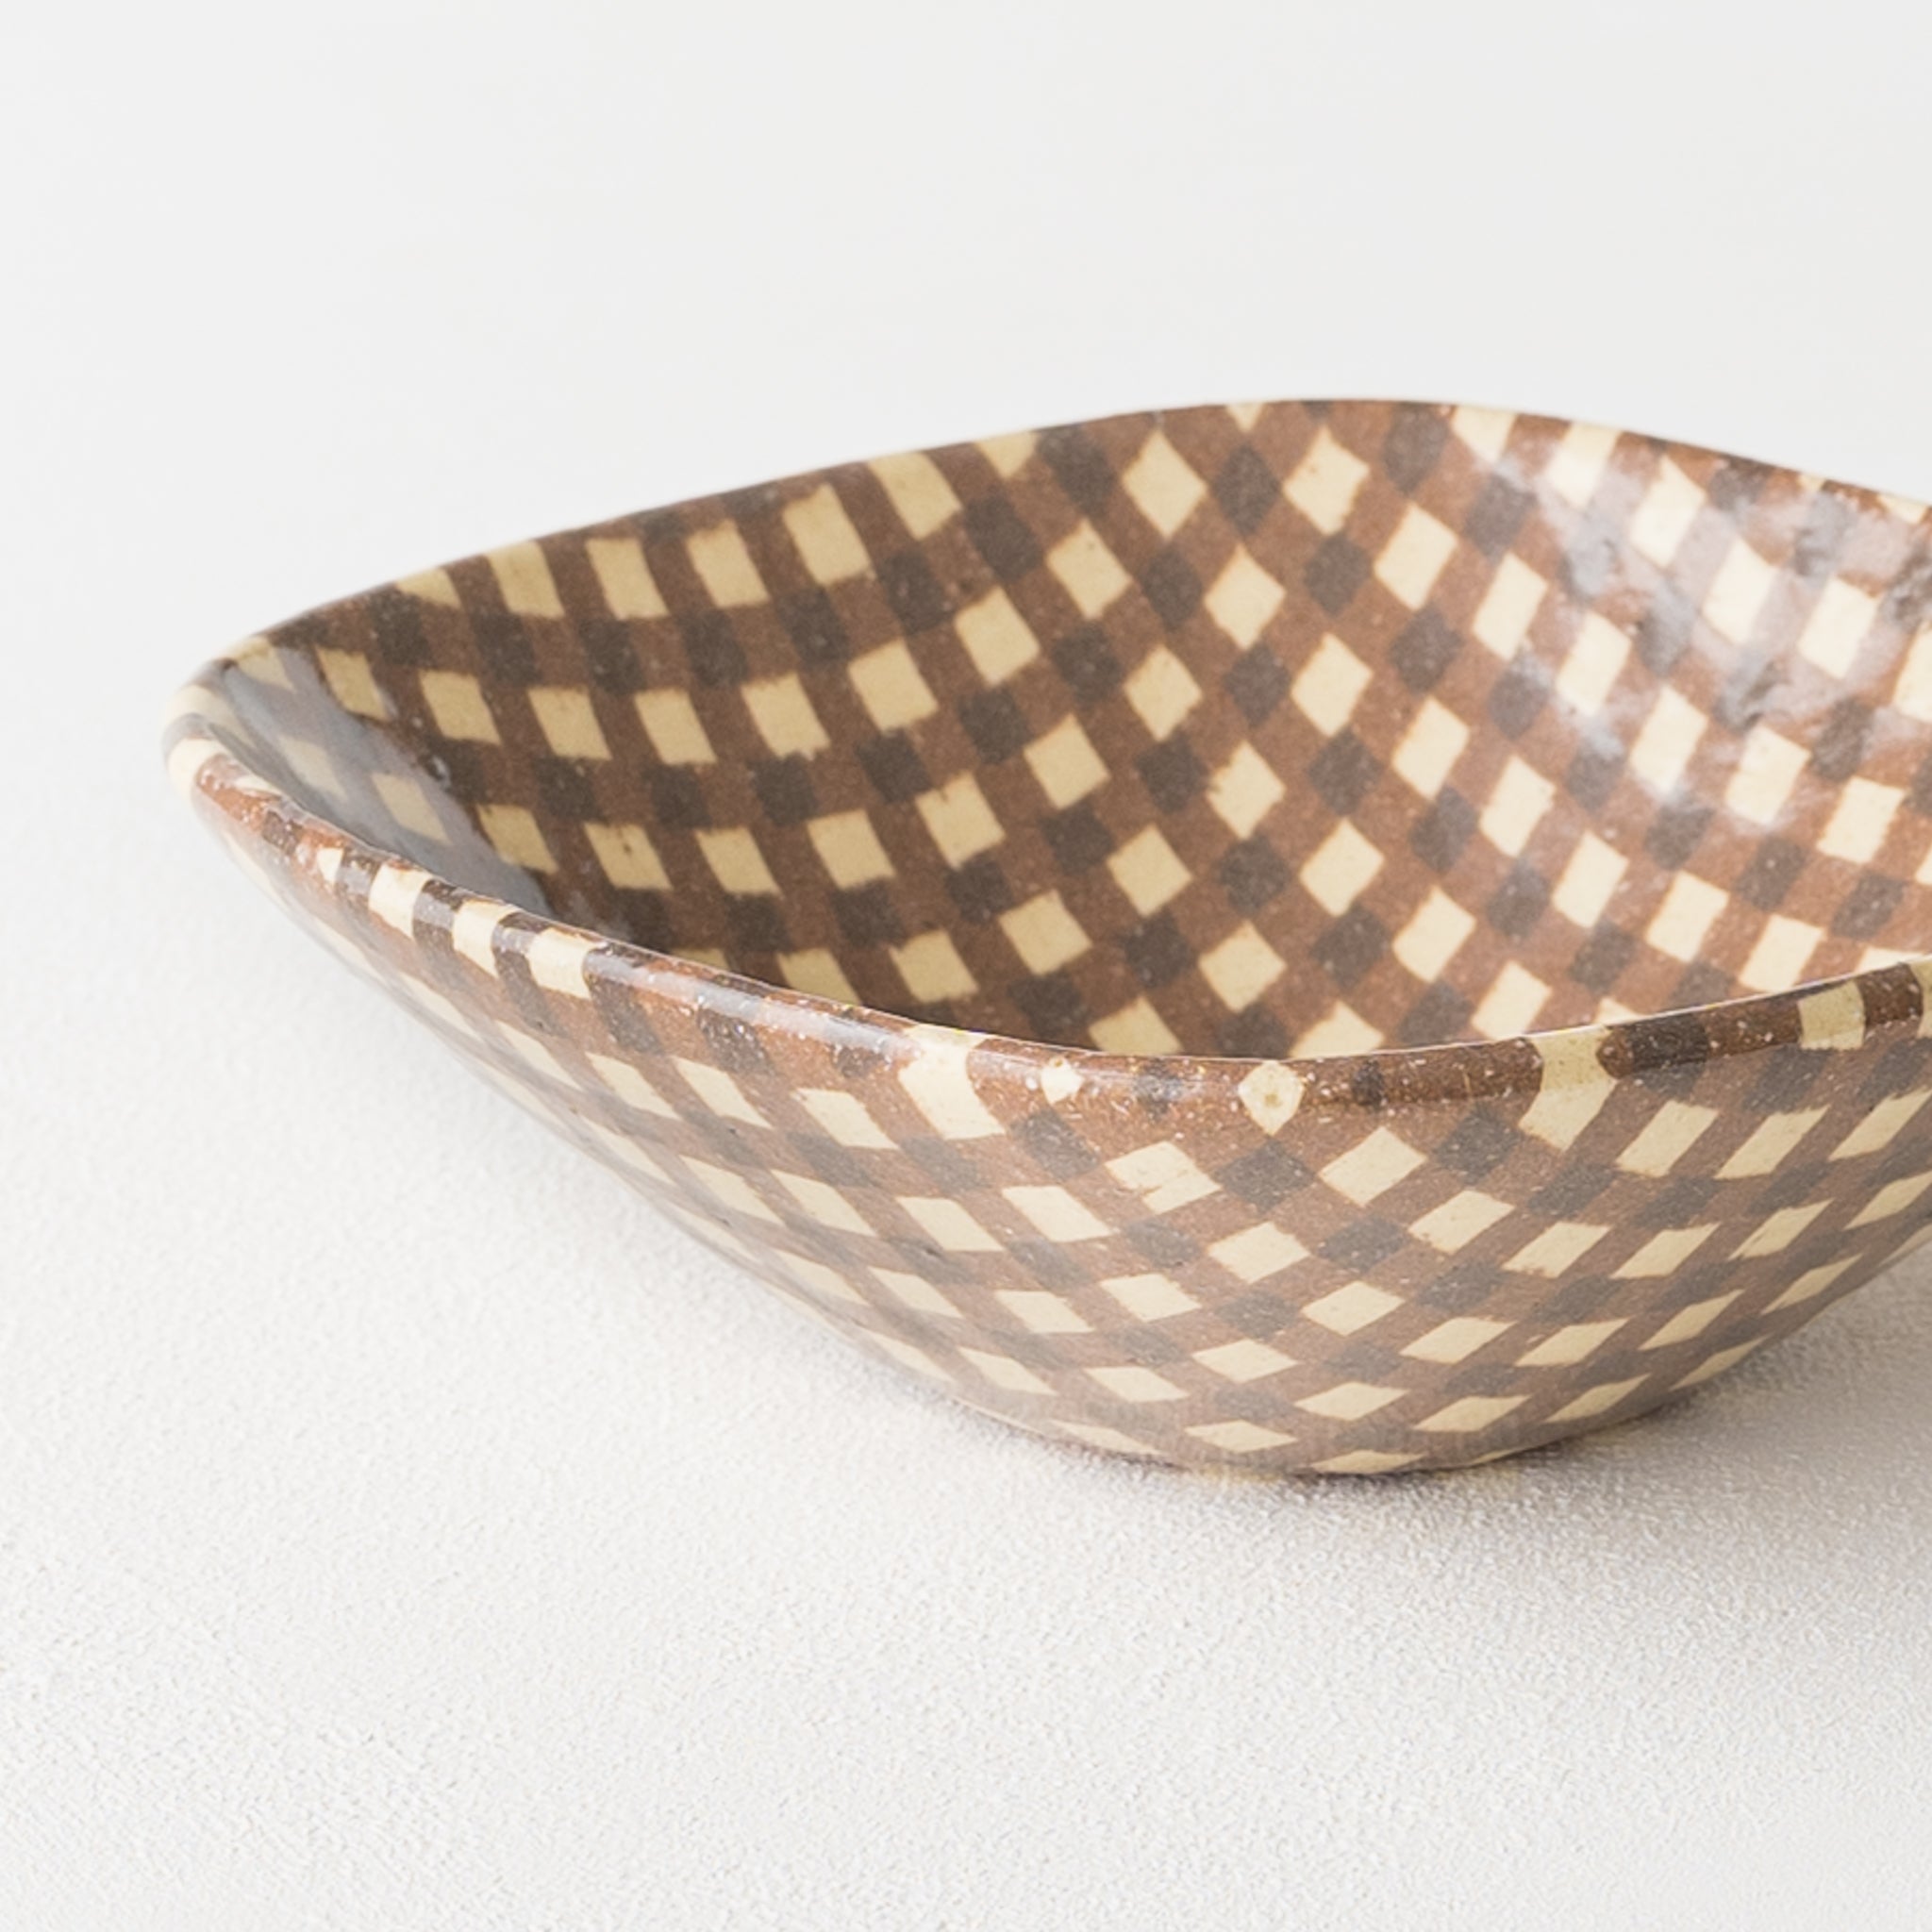 Hanako Sakashita's kneaded square bowl perfect for serving salads and fruits